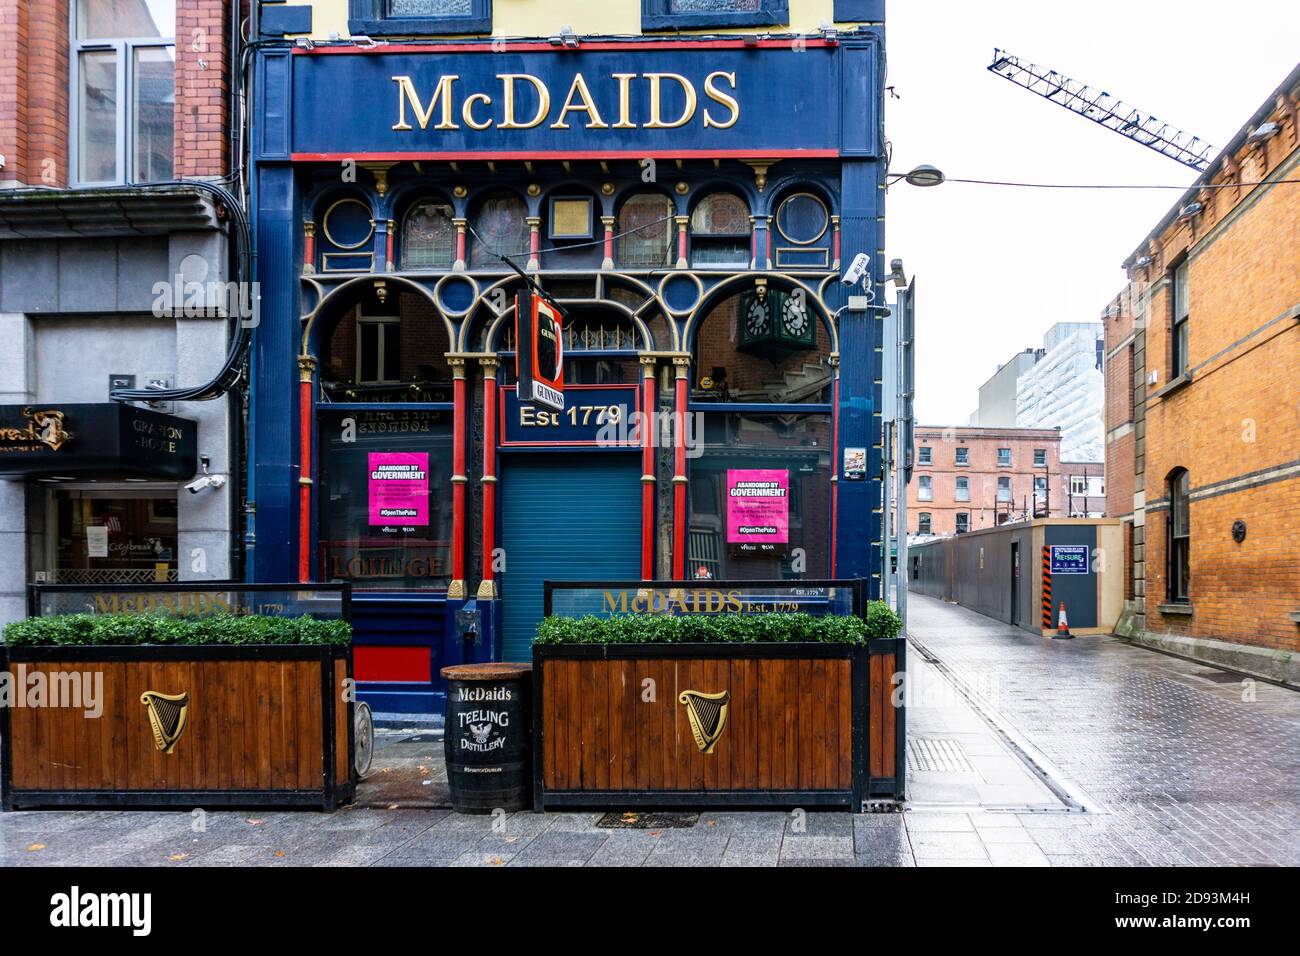 McDaids public house and bar in Harry Street, Dublin, Ireland. Once a famous literary haunt, Brendan Behan was a regular drinker here. Stock Photo